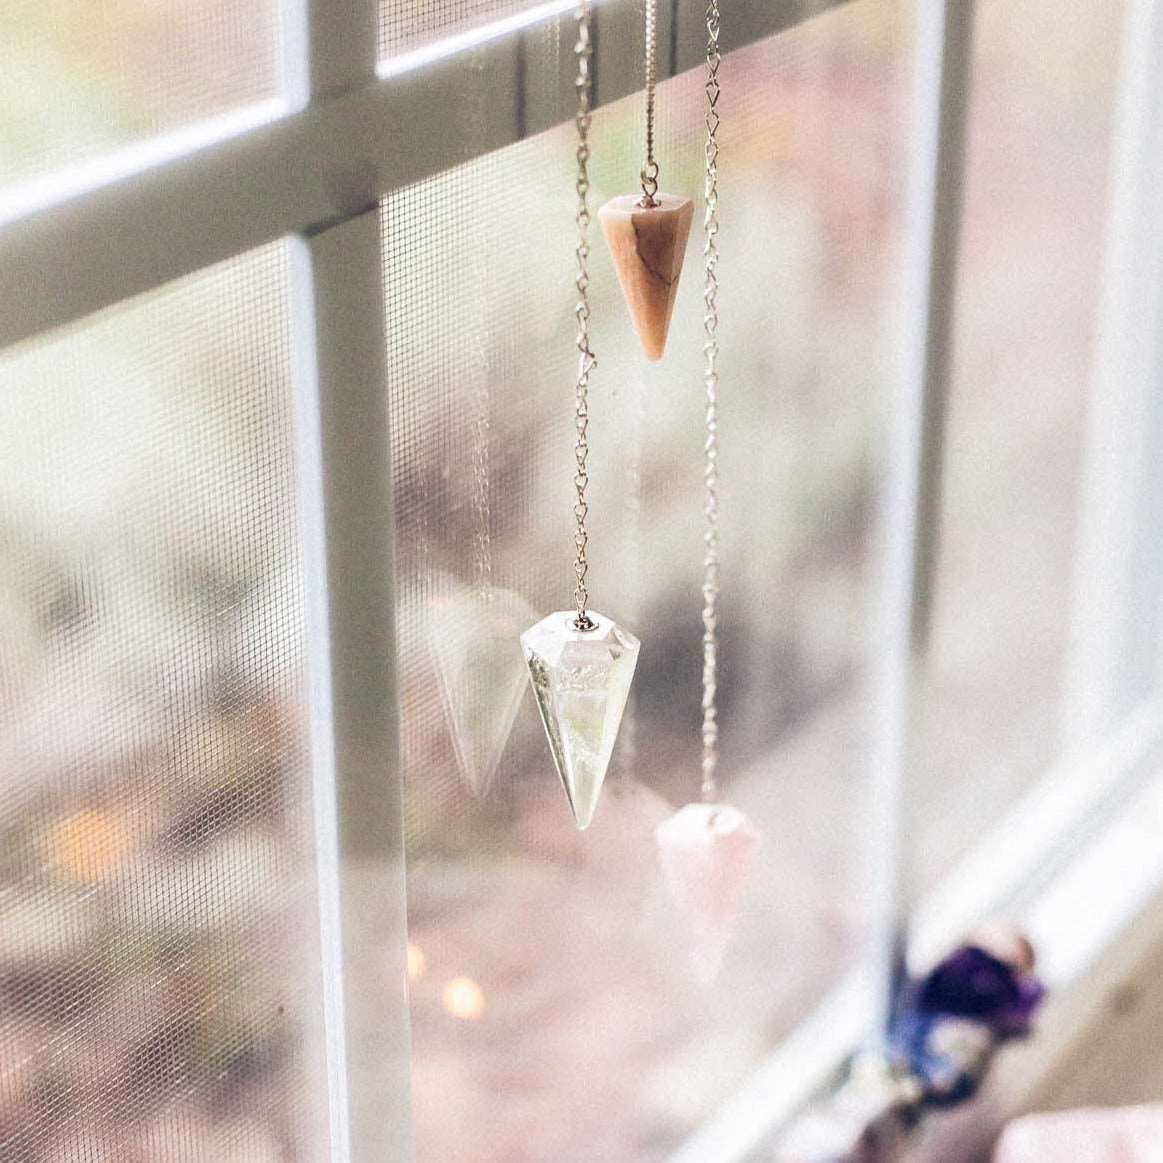 Crystal hanging pendulum